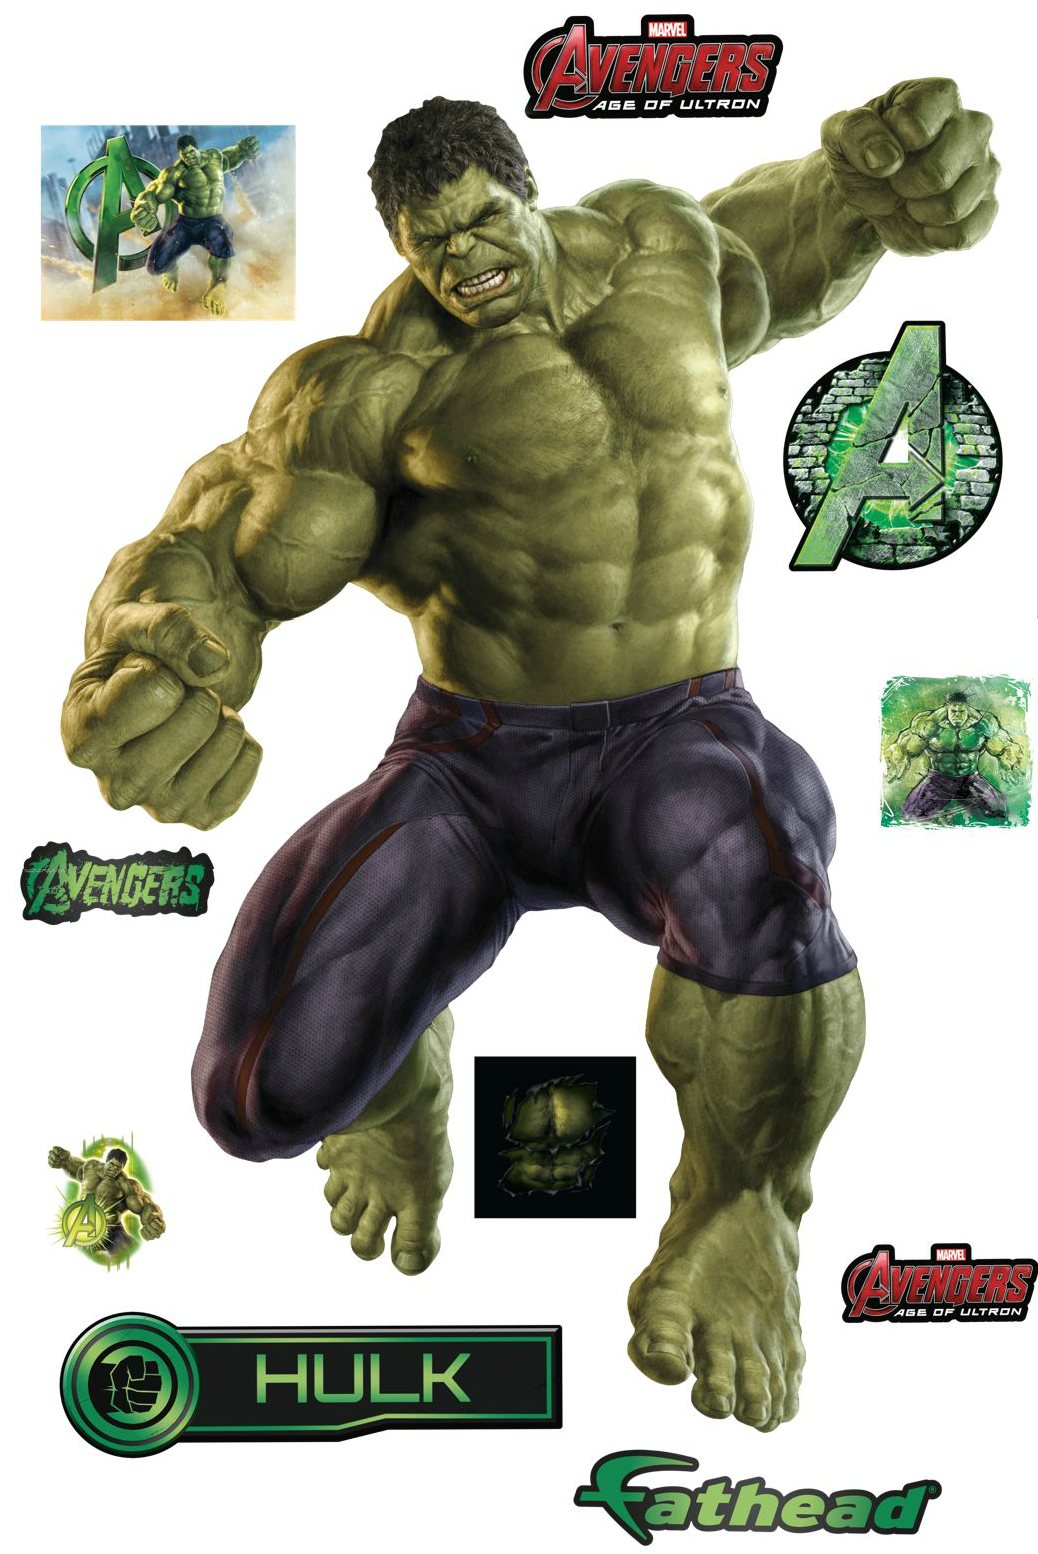 Avengers-Age-of-Ultron-Hulk-Fathead.png